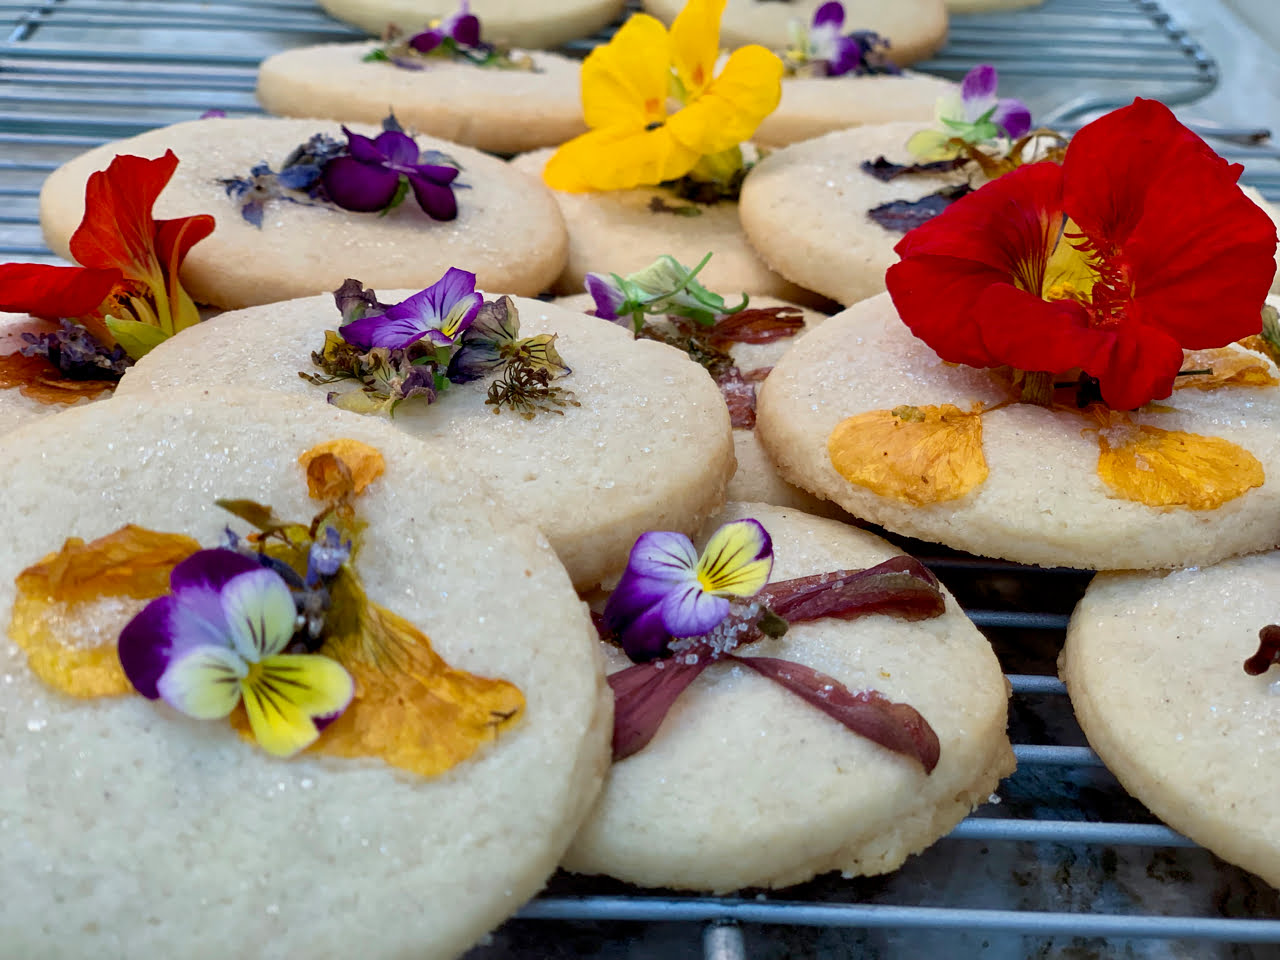 How To Make Edible Flower Shortbread Cookies